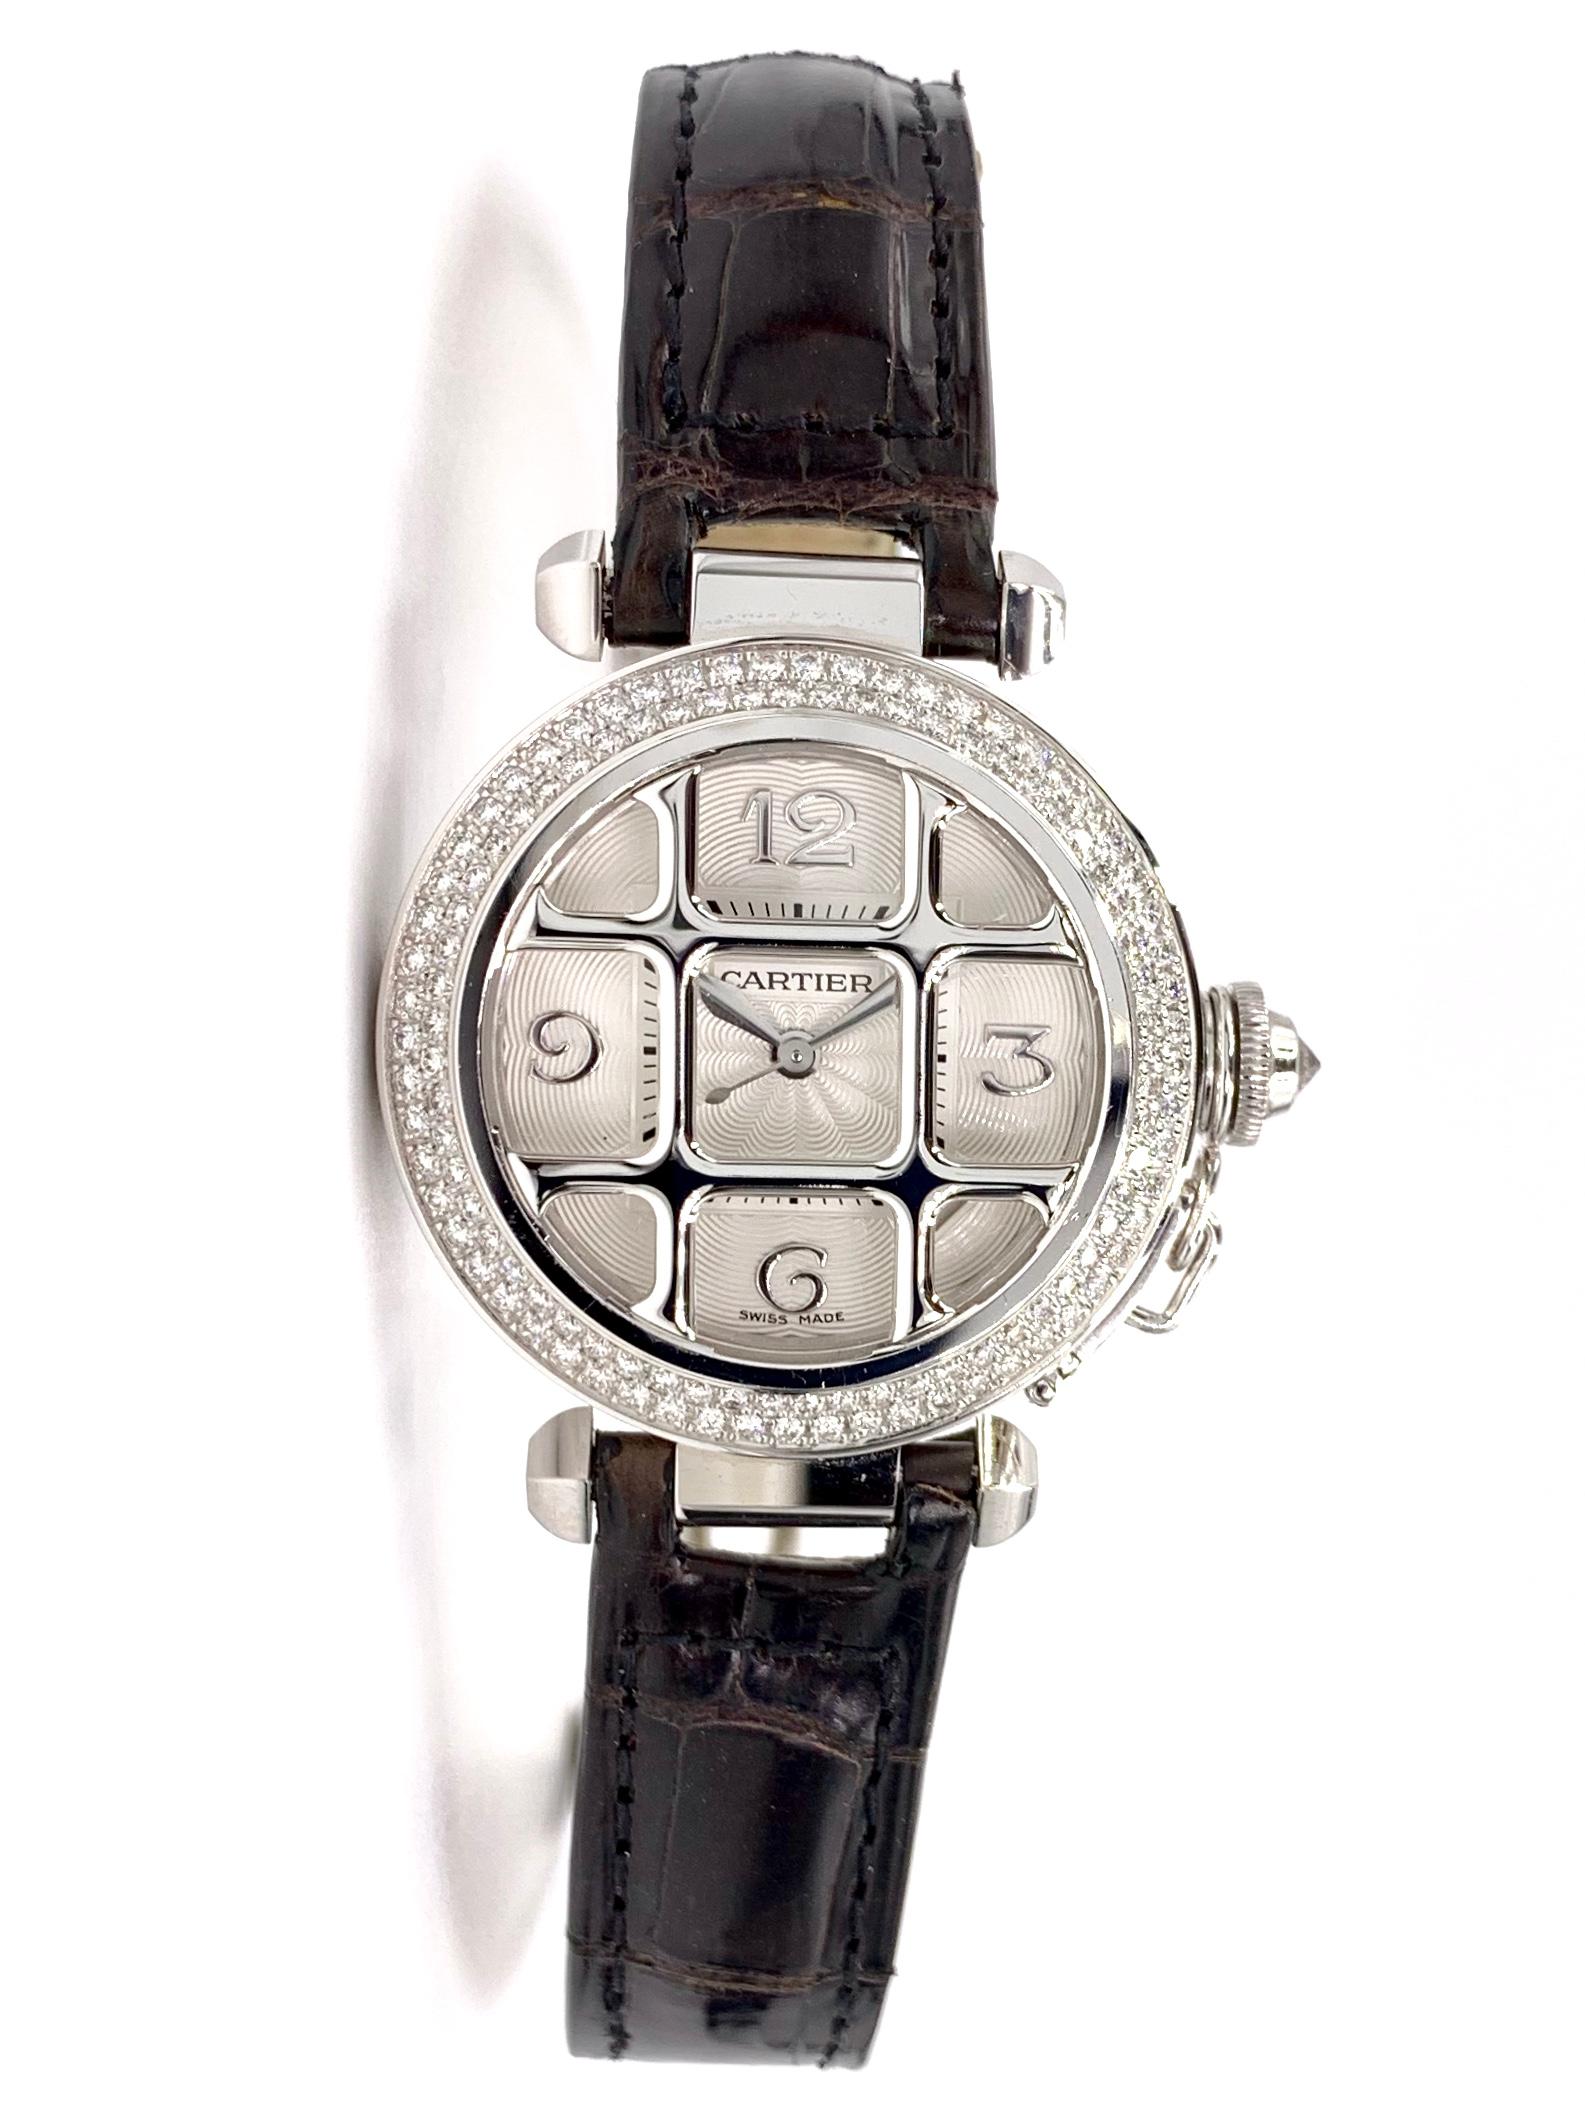 Contemporary 18 Karat and Diamond Cartier Pasha Watch WJ111451 For Sale